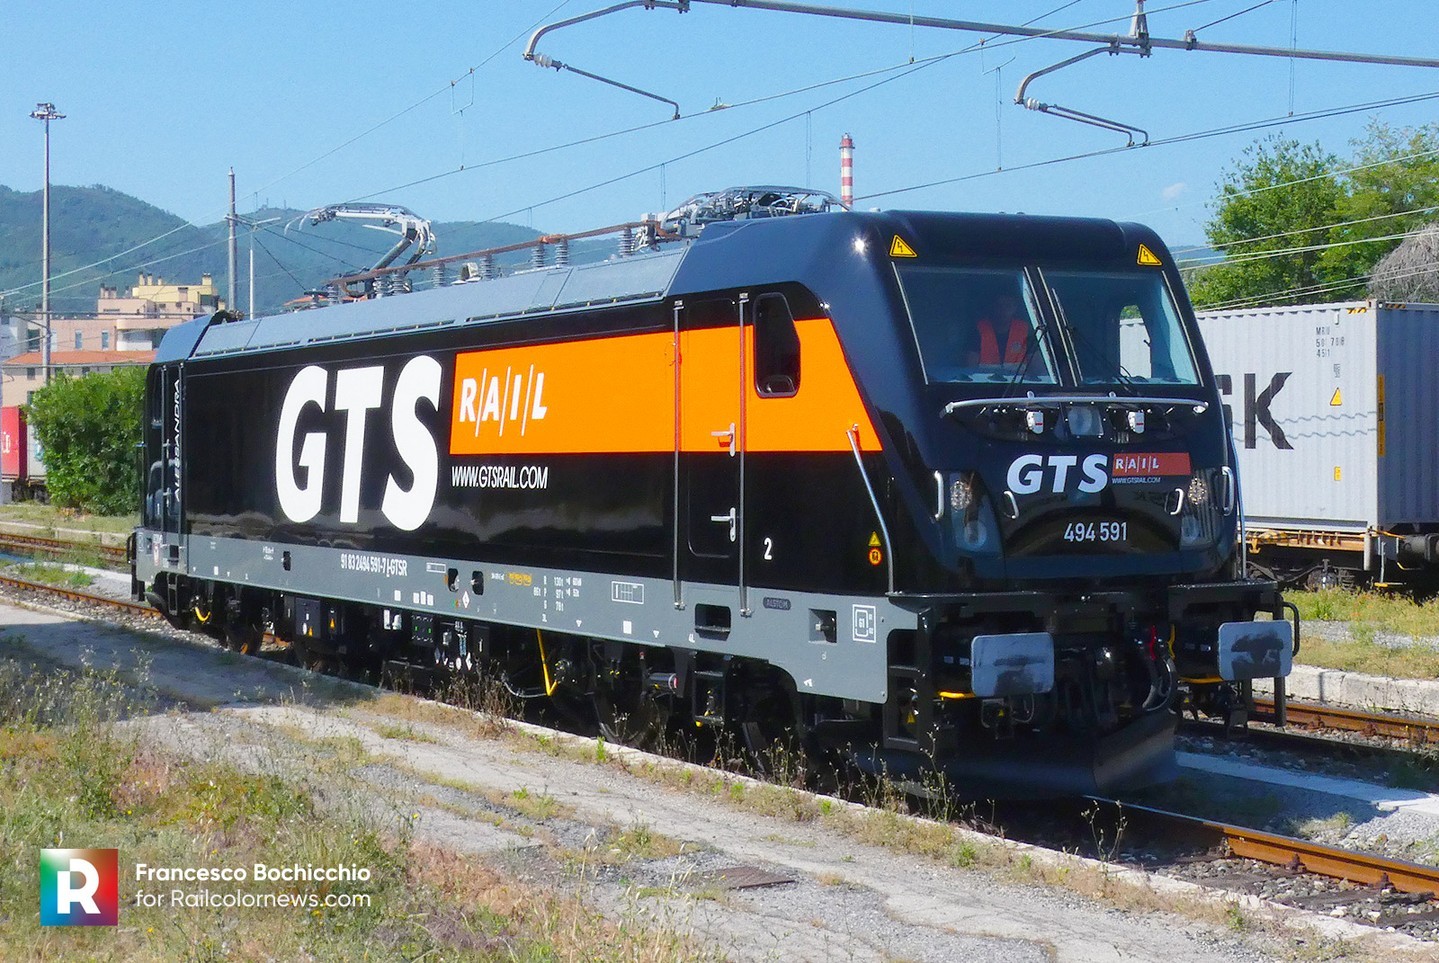 📸 by Francesco Bochicchio 🇮🇹 New GTS TRAXX DC3 out ⬆️ Our subscribers can see the article with details on RailcolorNews.com
.
.
.
.
#railways #railcolornews #railways_of_europe #eisenbahnfotografie #railwayphotography #bombardiertraxx #alstomtraxxdc3 #alstom #traxx #traxxdc3 #electriclocomotive #ellok #treni #vadoligure #italia #treni #gtsrail #gtstraxx #gtstraxxdc3 #gts #vadoligure #stazione #ferrovie #ferrovia #ferrovieitaliane #trenomerci #494591 #gtsr #alessandra #italianrailways